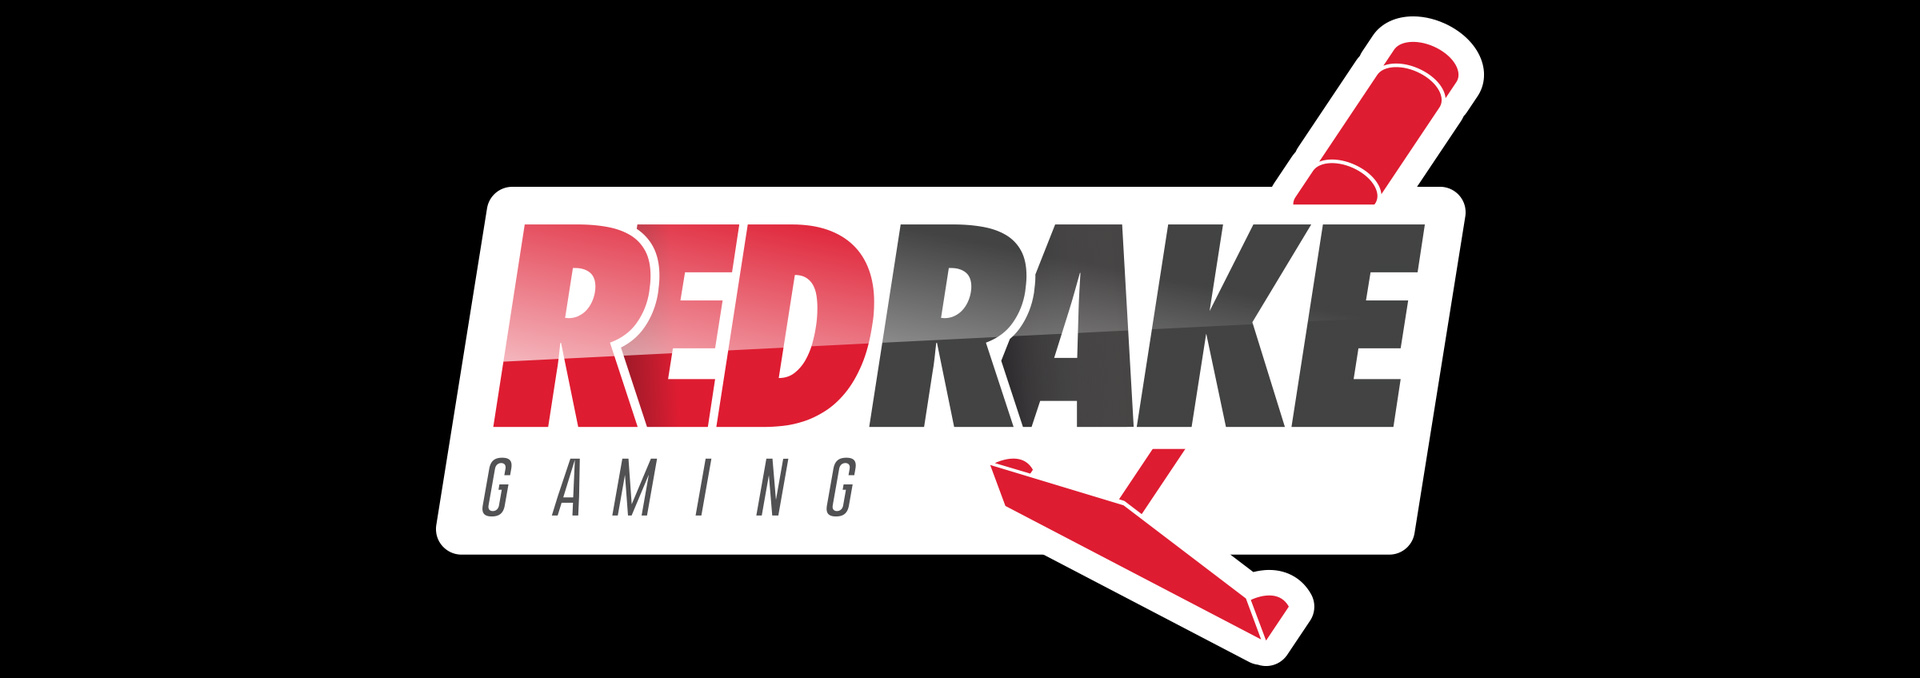 Video poker games from Red Rake Gaming